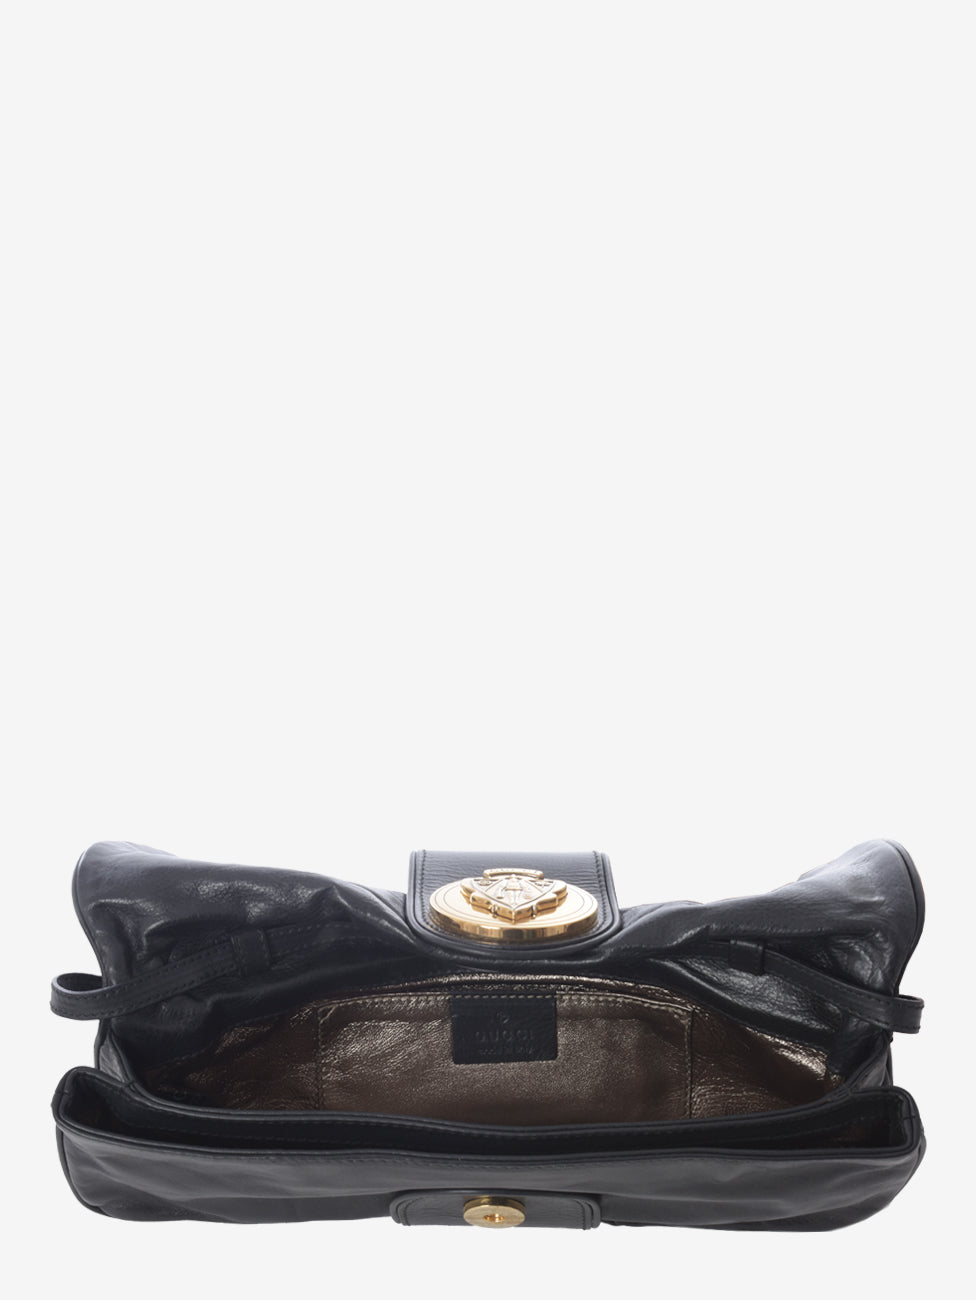 Vintage Gucci Leather Handbag - '70s